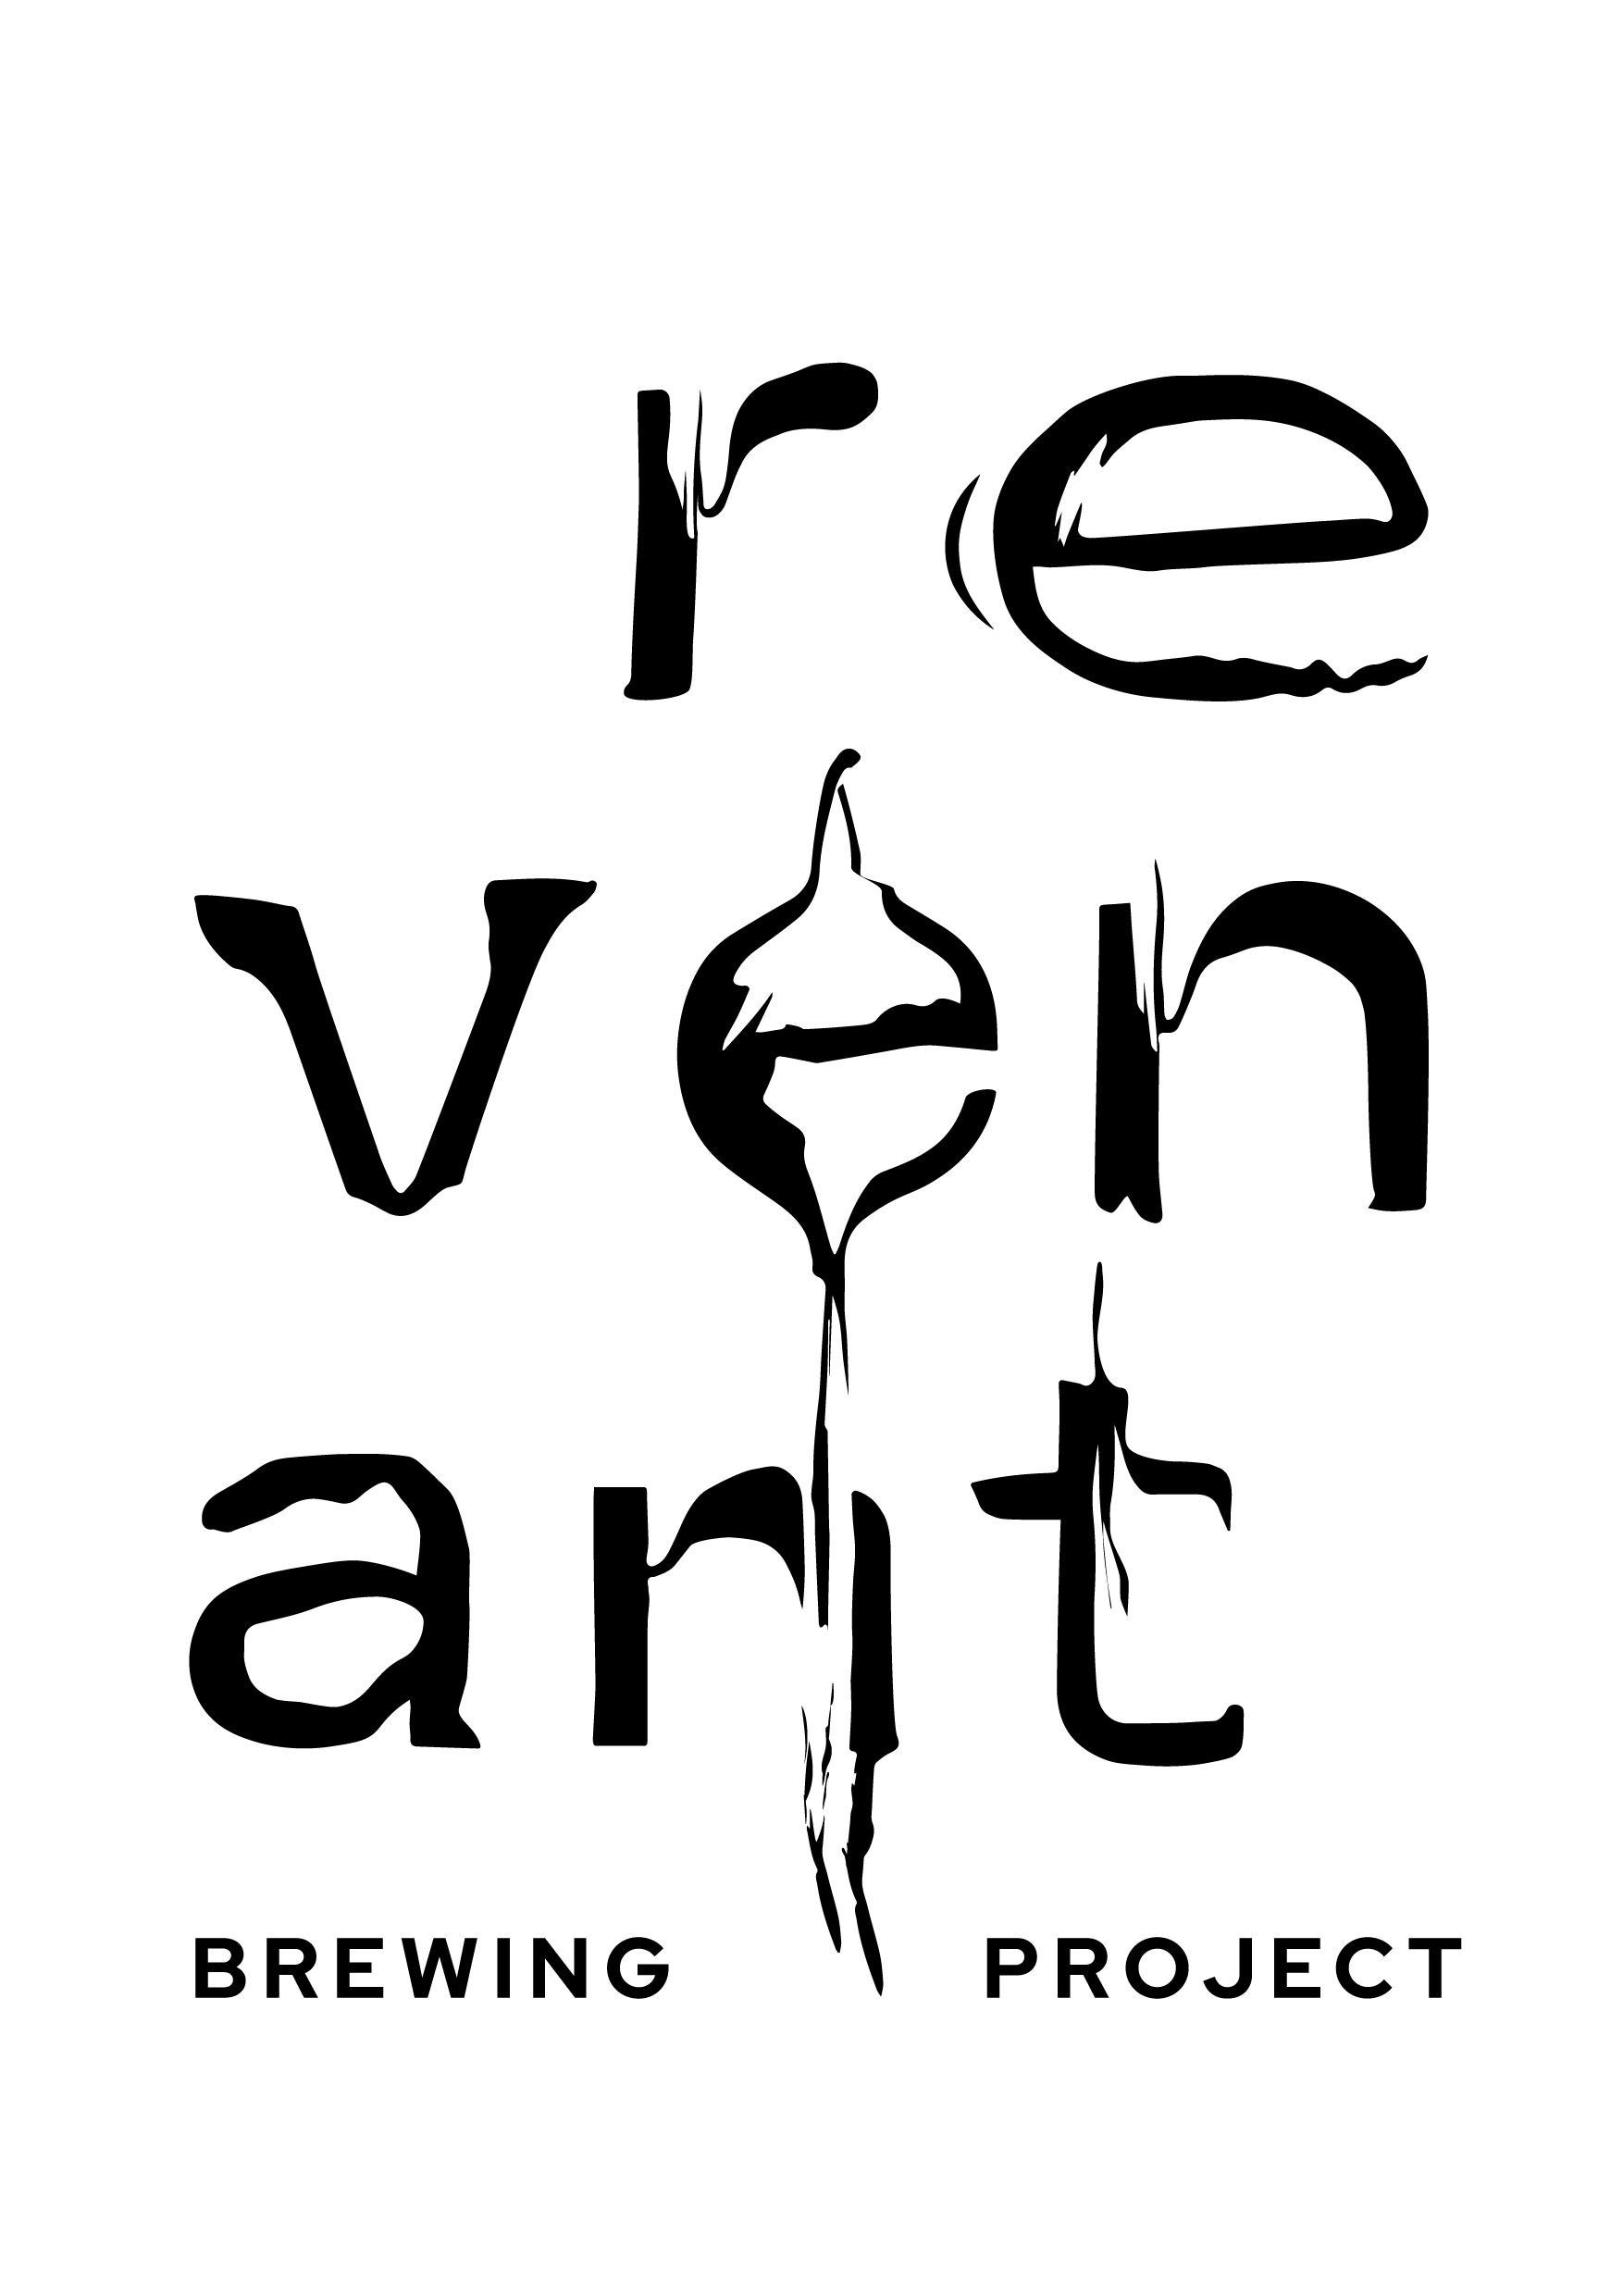 Revenant brewin project -logo